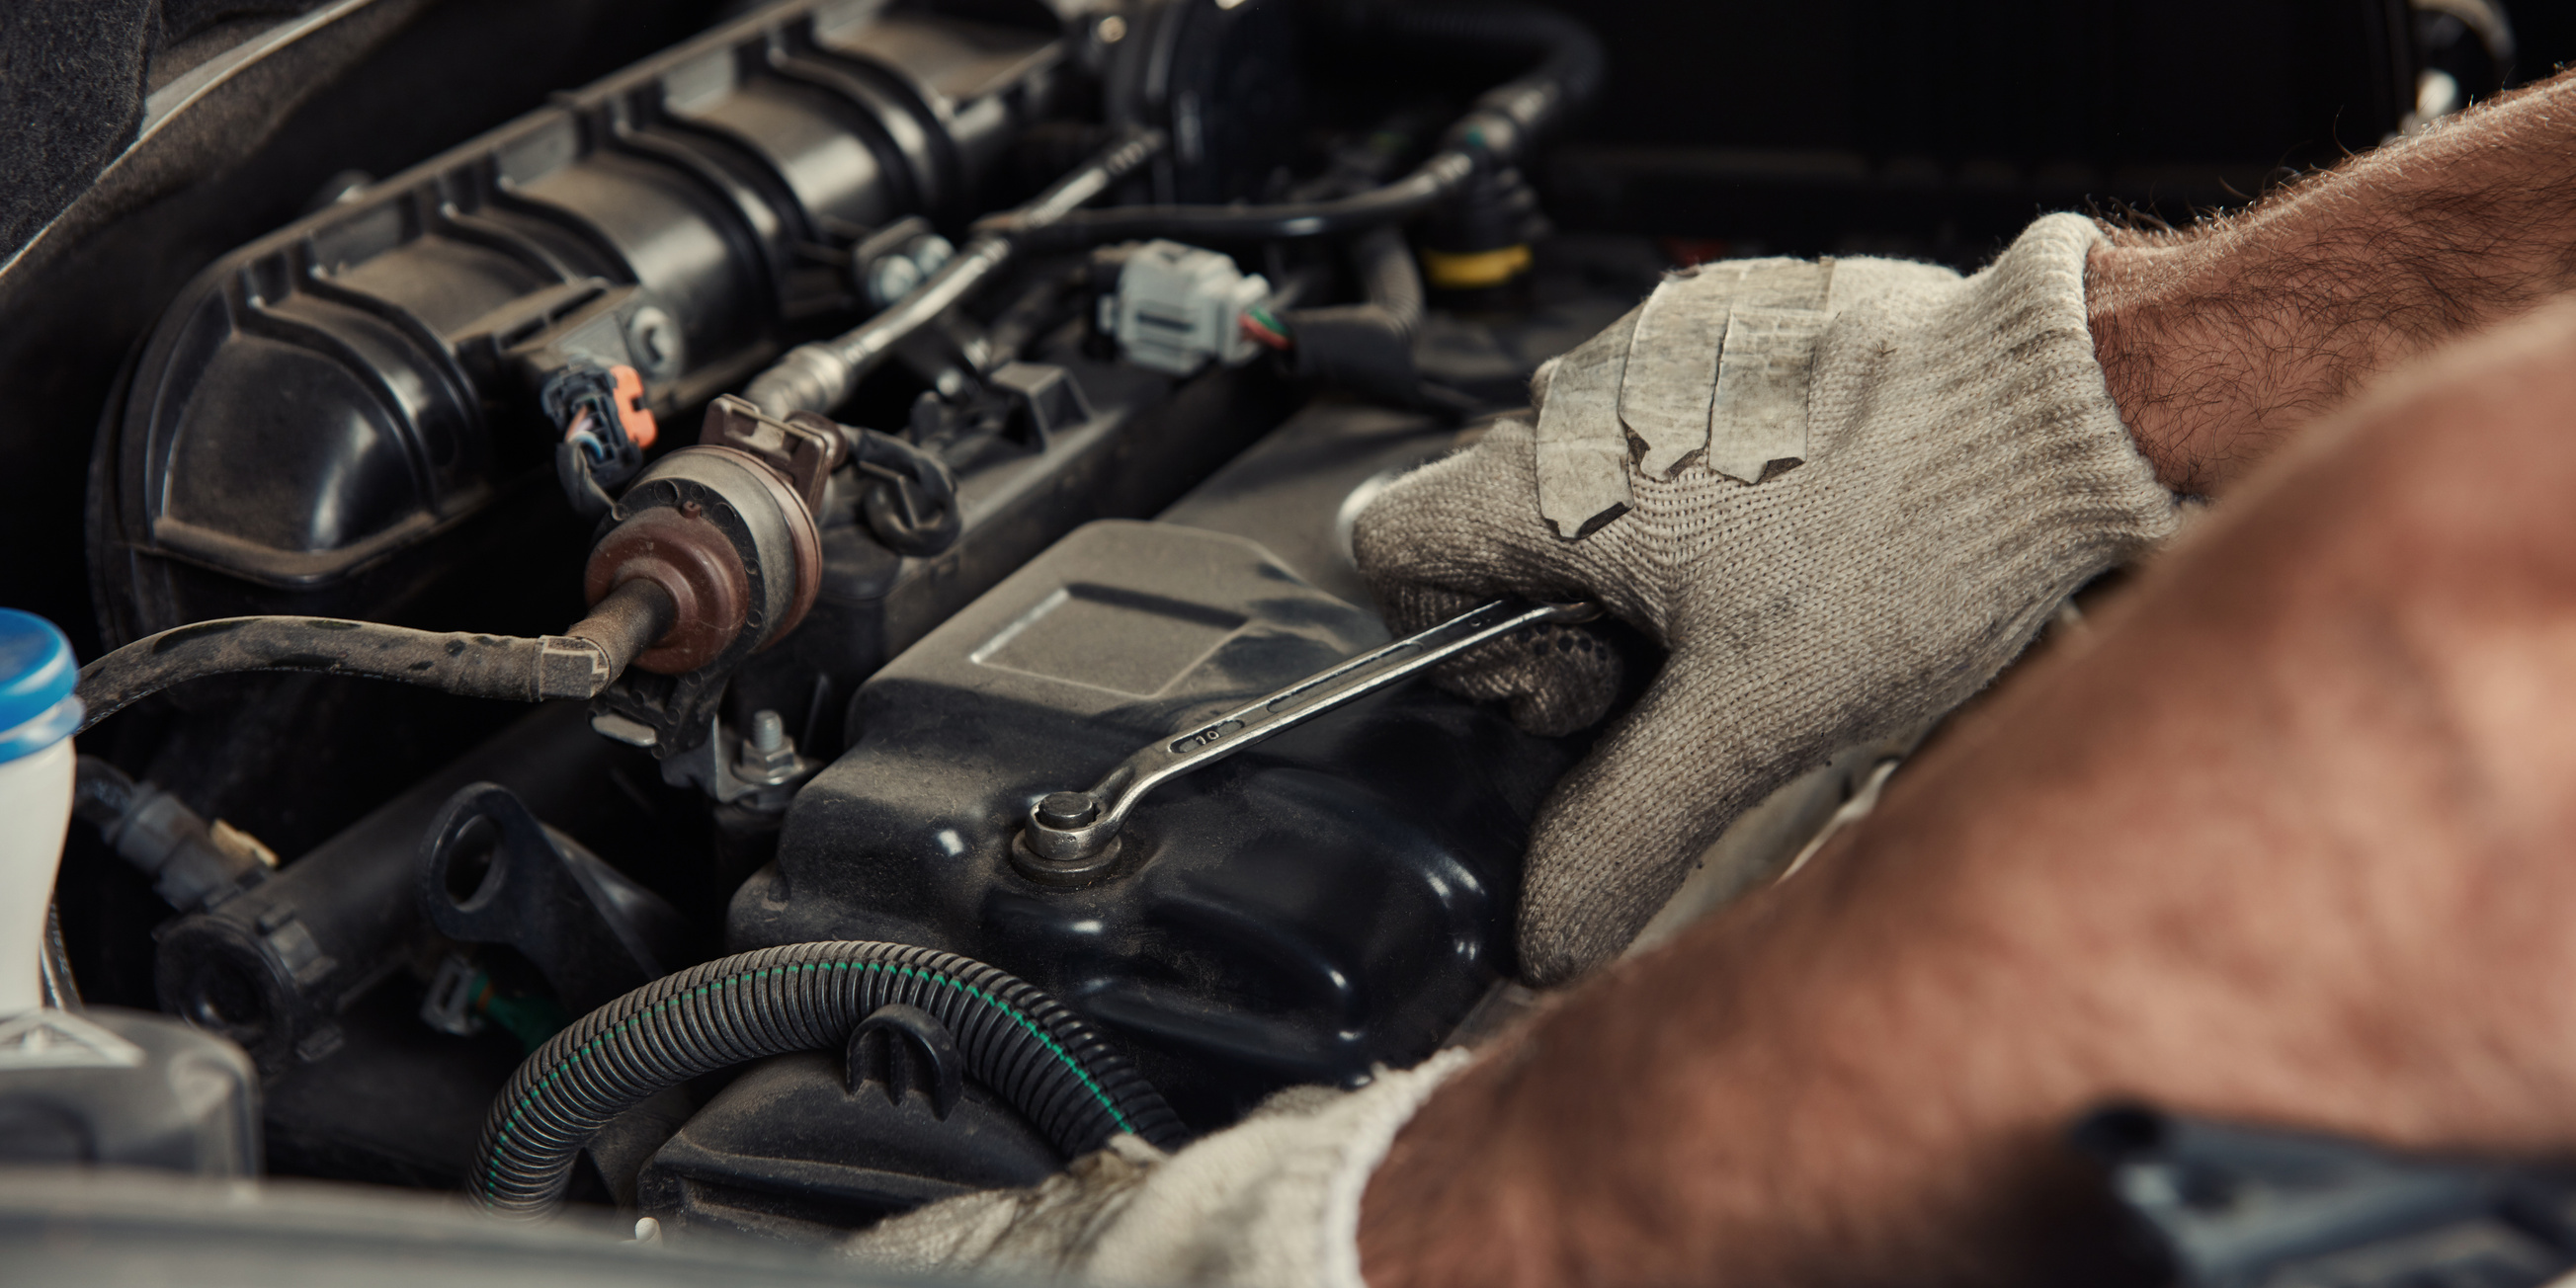 Hand on Engine at Car Repair in Workshop